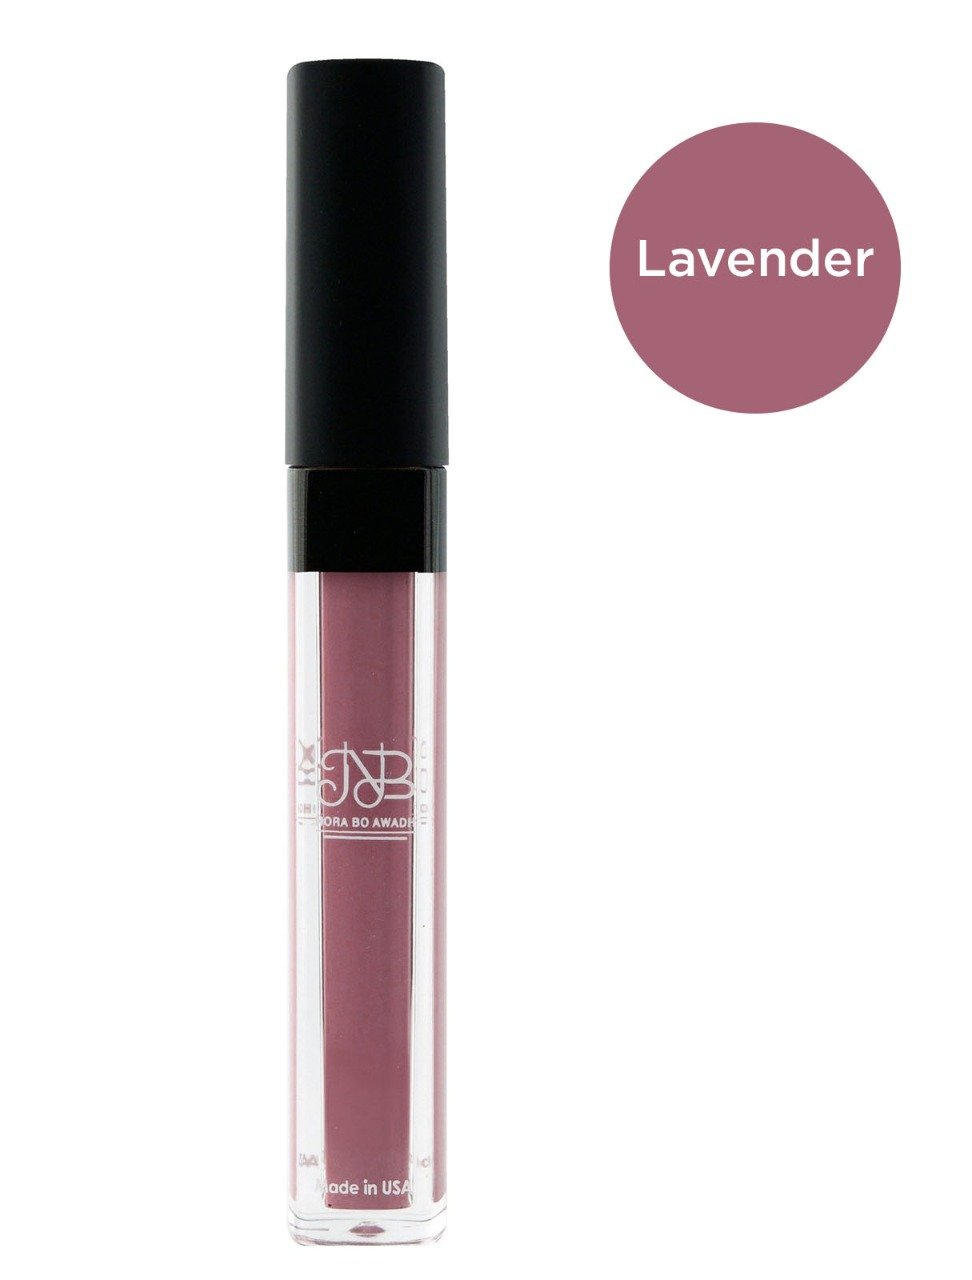 Nora Bo Awadh Lavender Liquid Lipstick